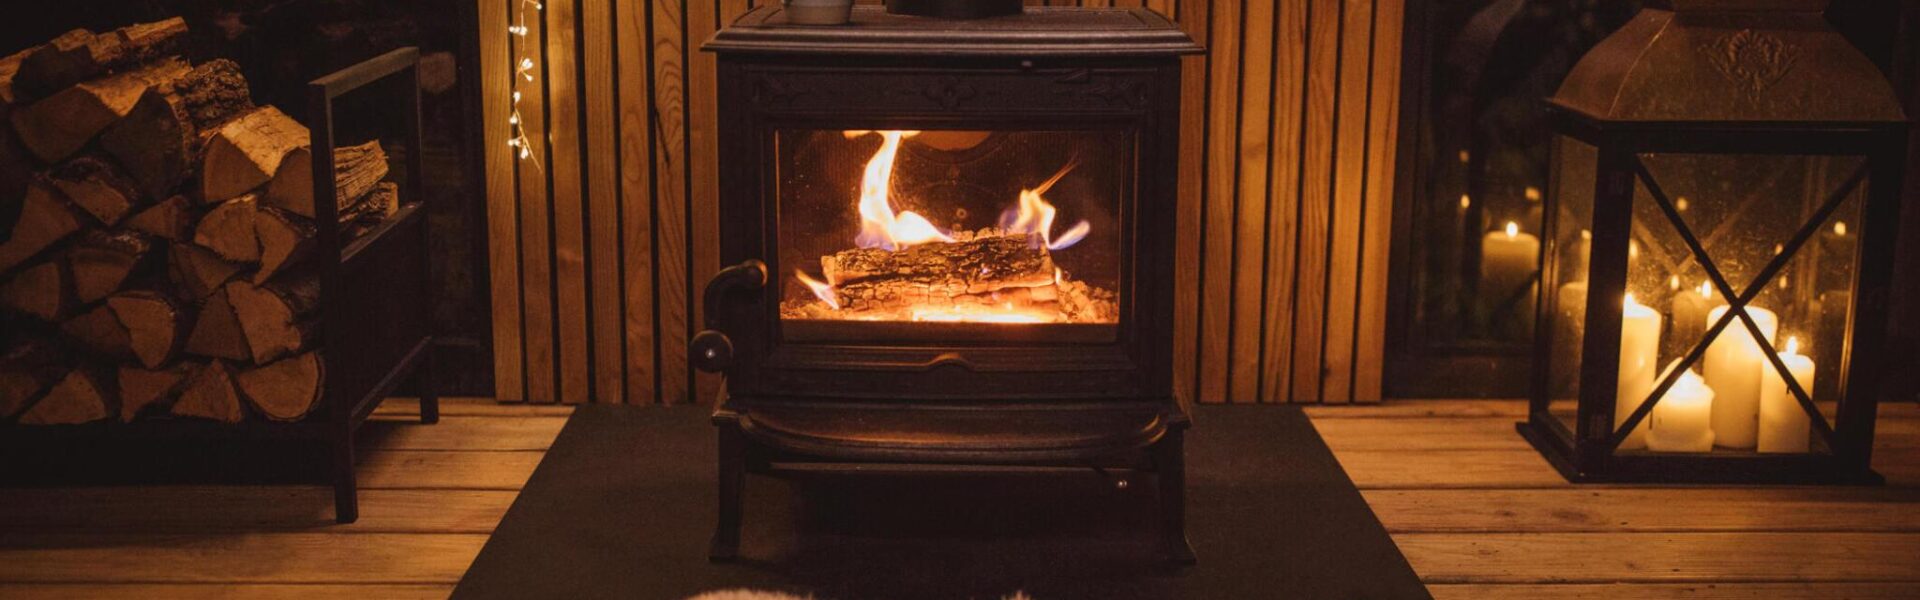 Revolutionizing Home Comfort: The 3D Water Vapor Fireplace